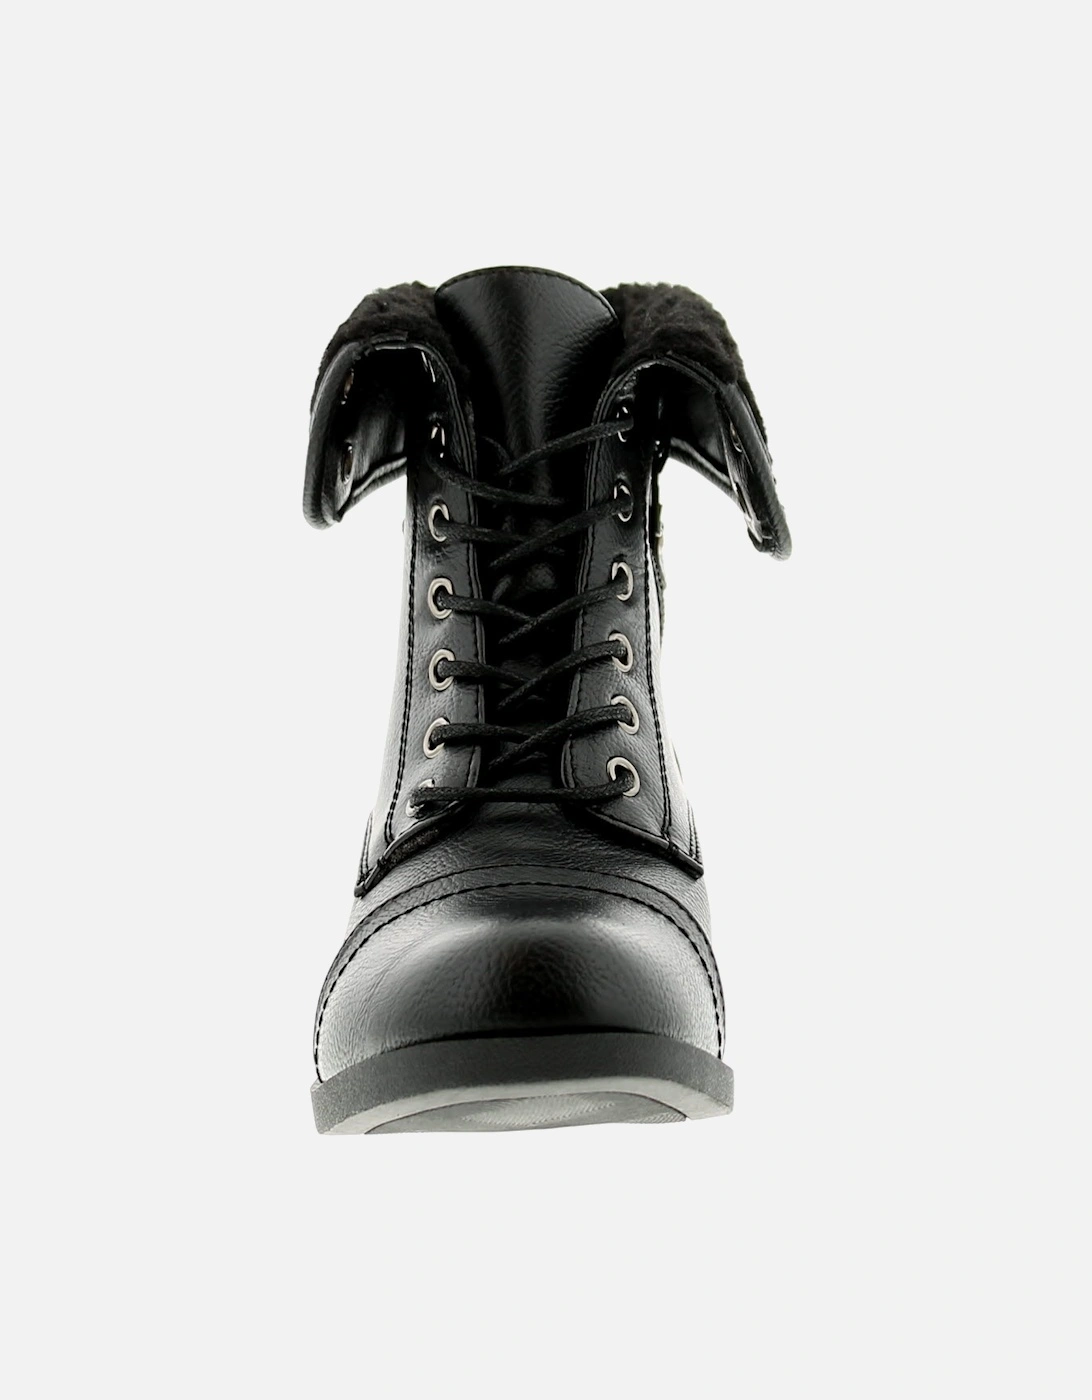 Womens Ankle Boots Shreena Lace Up black UK Size